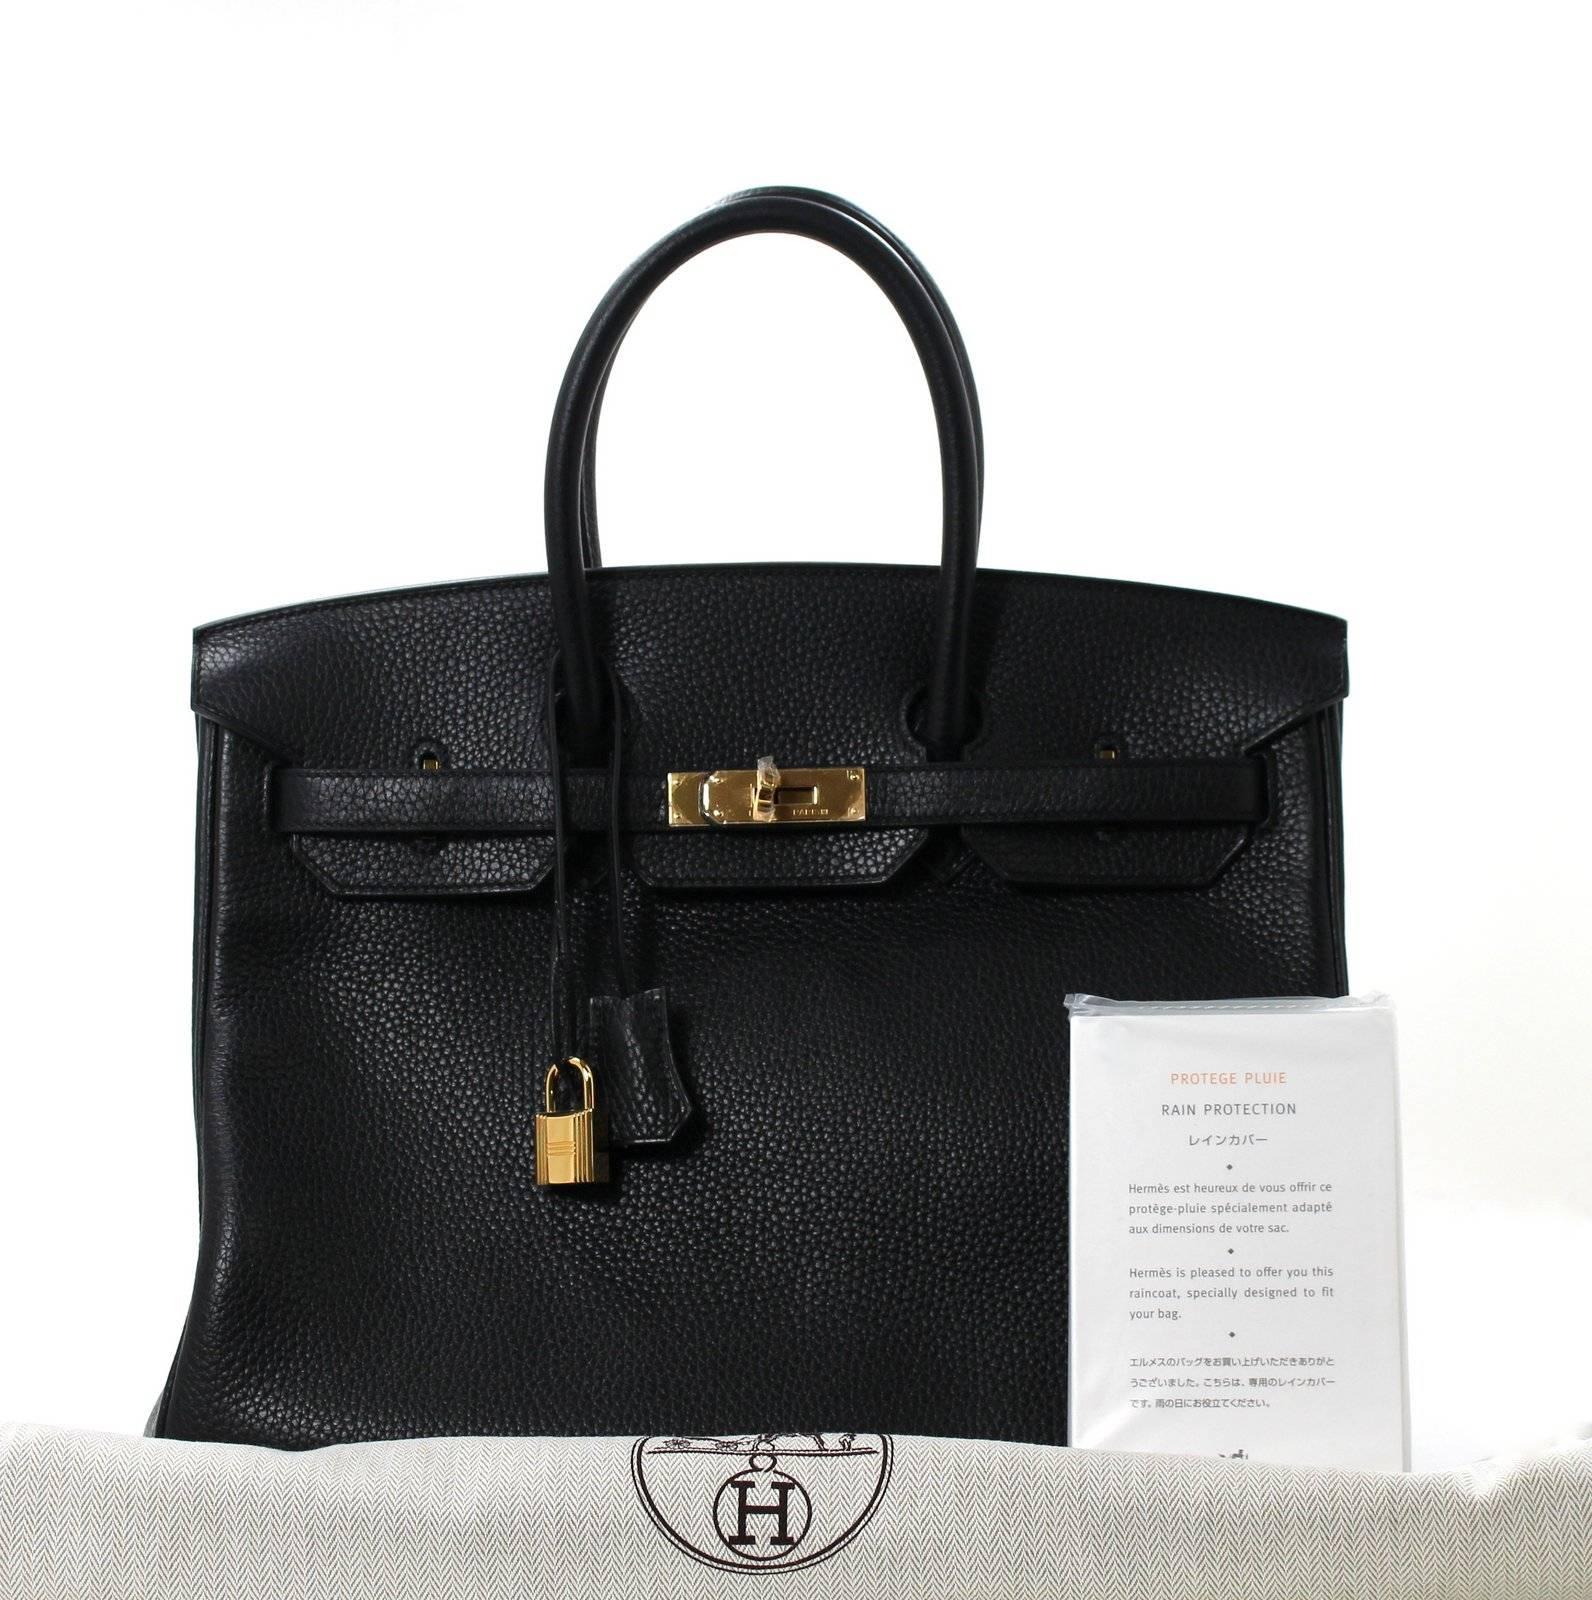 Hermès 35 cm Birkin Bag in BLACK Togo Leather with Gold 4